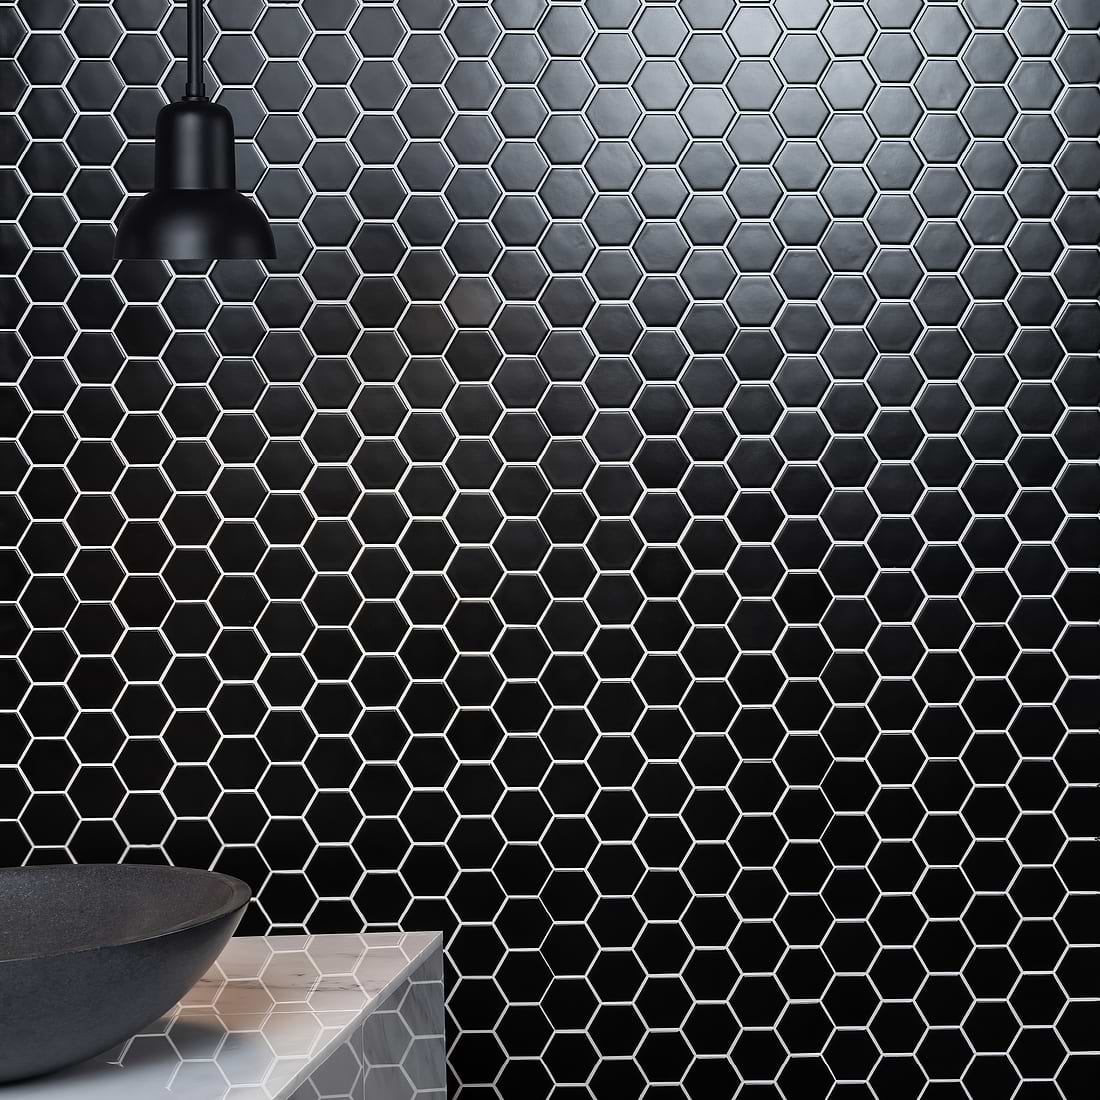 Black Large Honeycomb Floor Mosaic - Hyperion Tiles